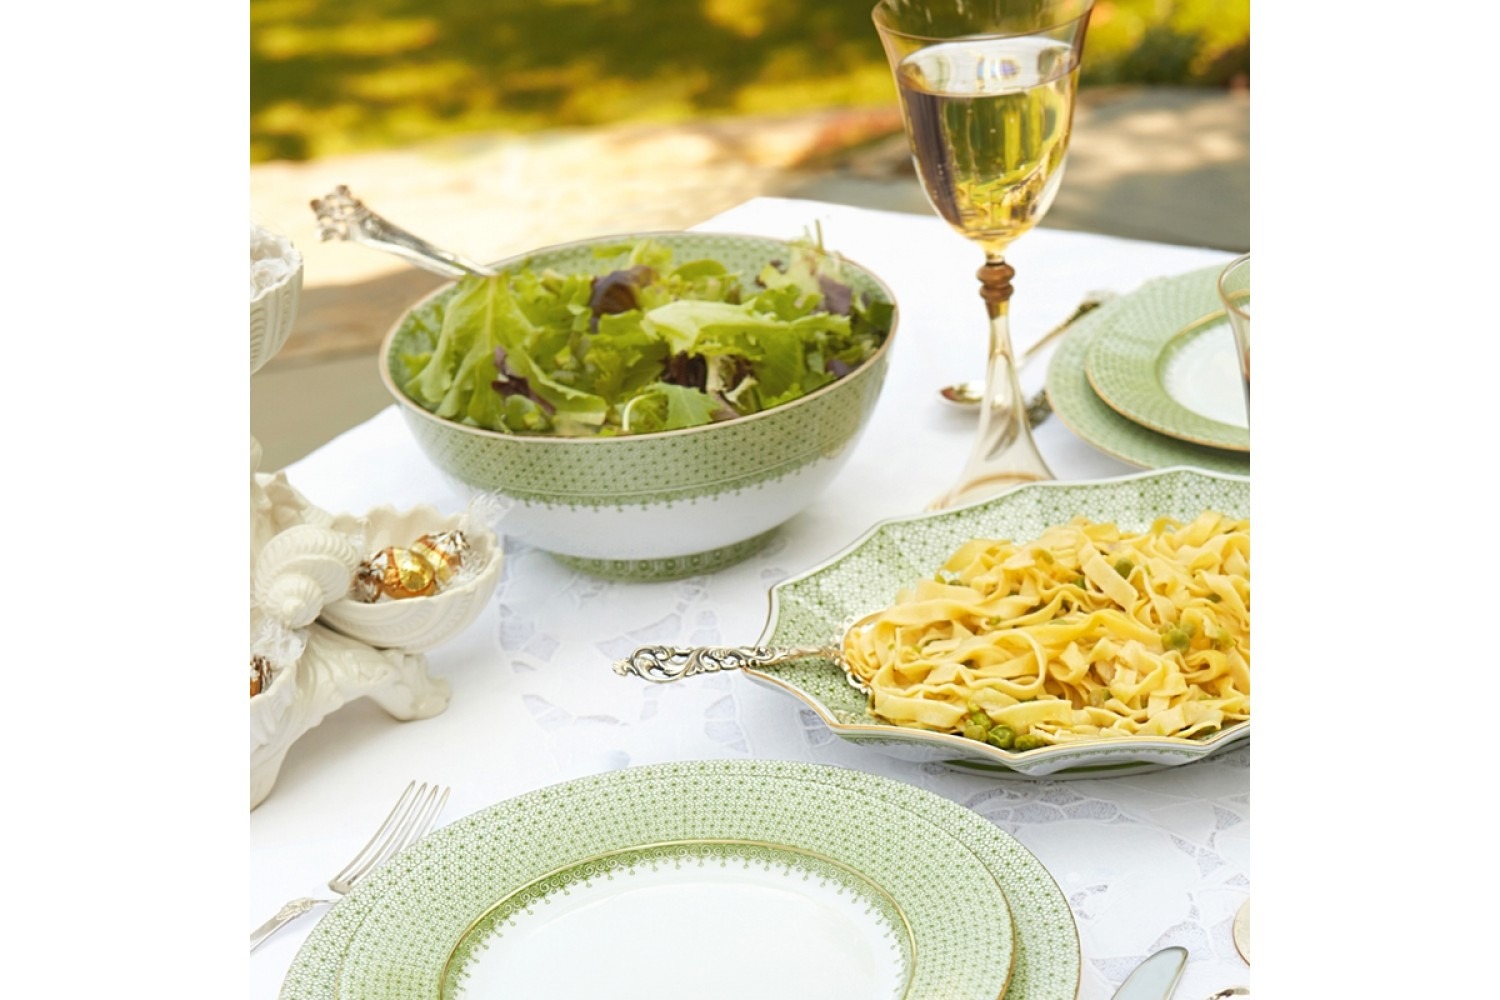 Luxury Noble Tray Home Gift Dinner Set Royal Gold Rim Wedding Plates  Ceramic Porcelain Tableware - Buy Kitchen Plates Set Dinner  Dinnerware,Plates